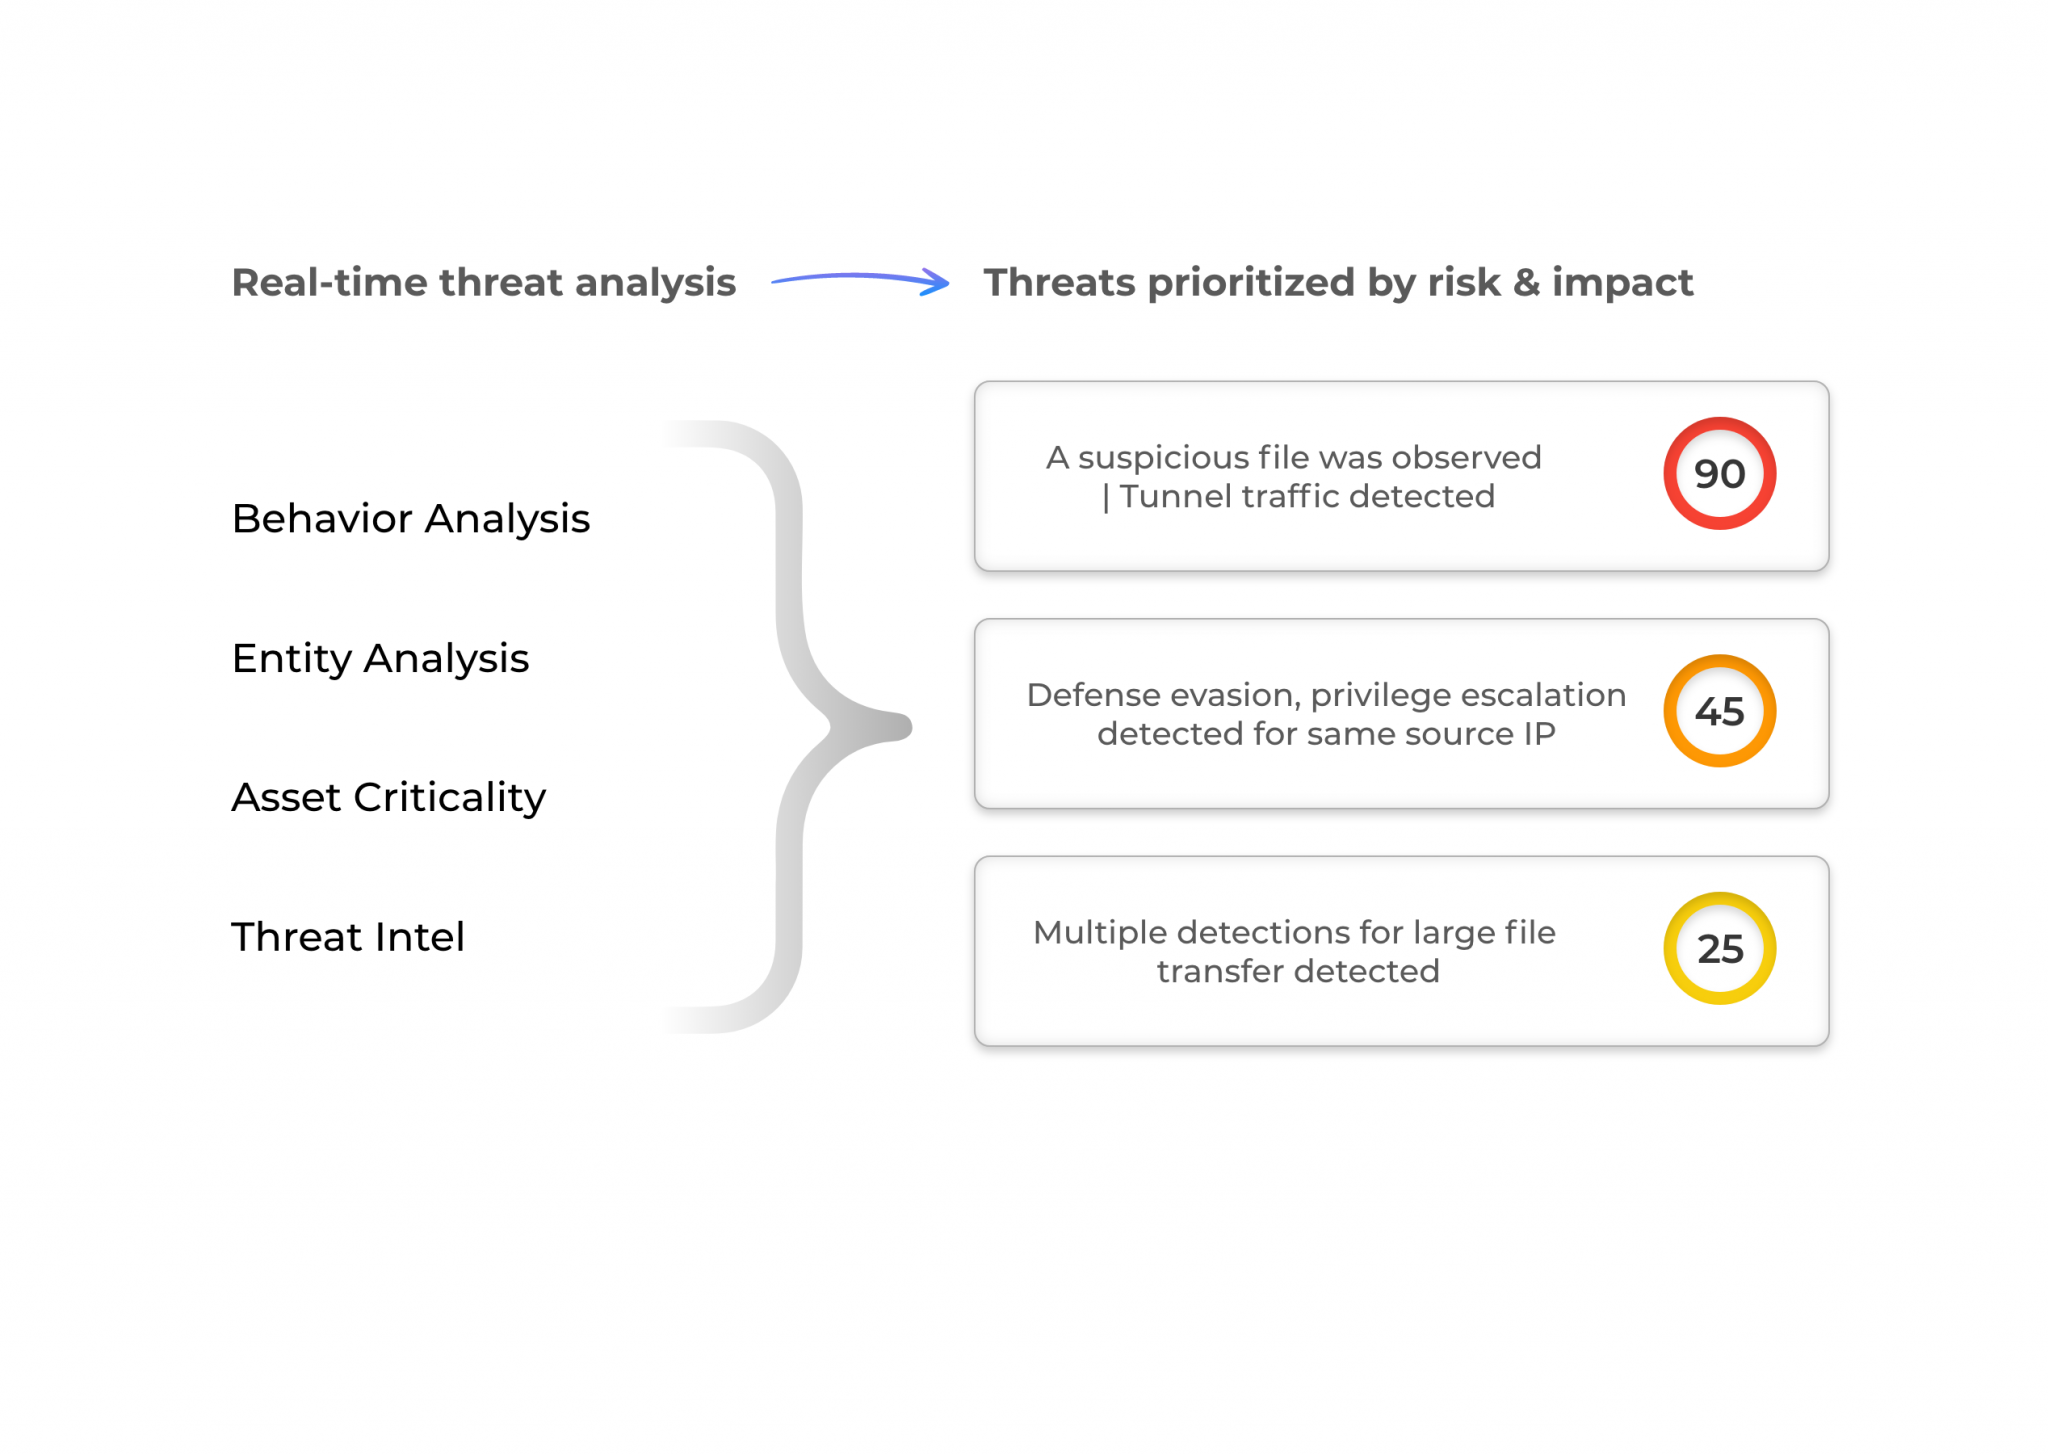 Real time threat analysis